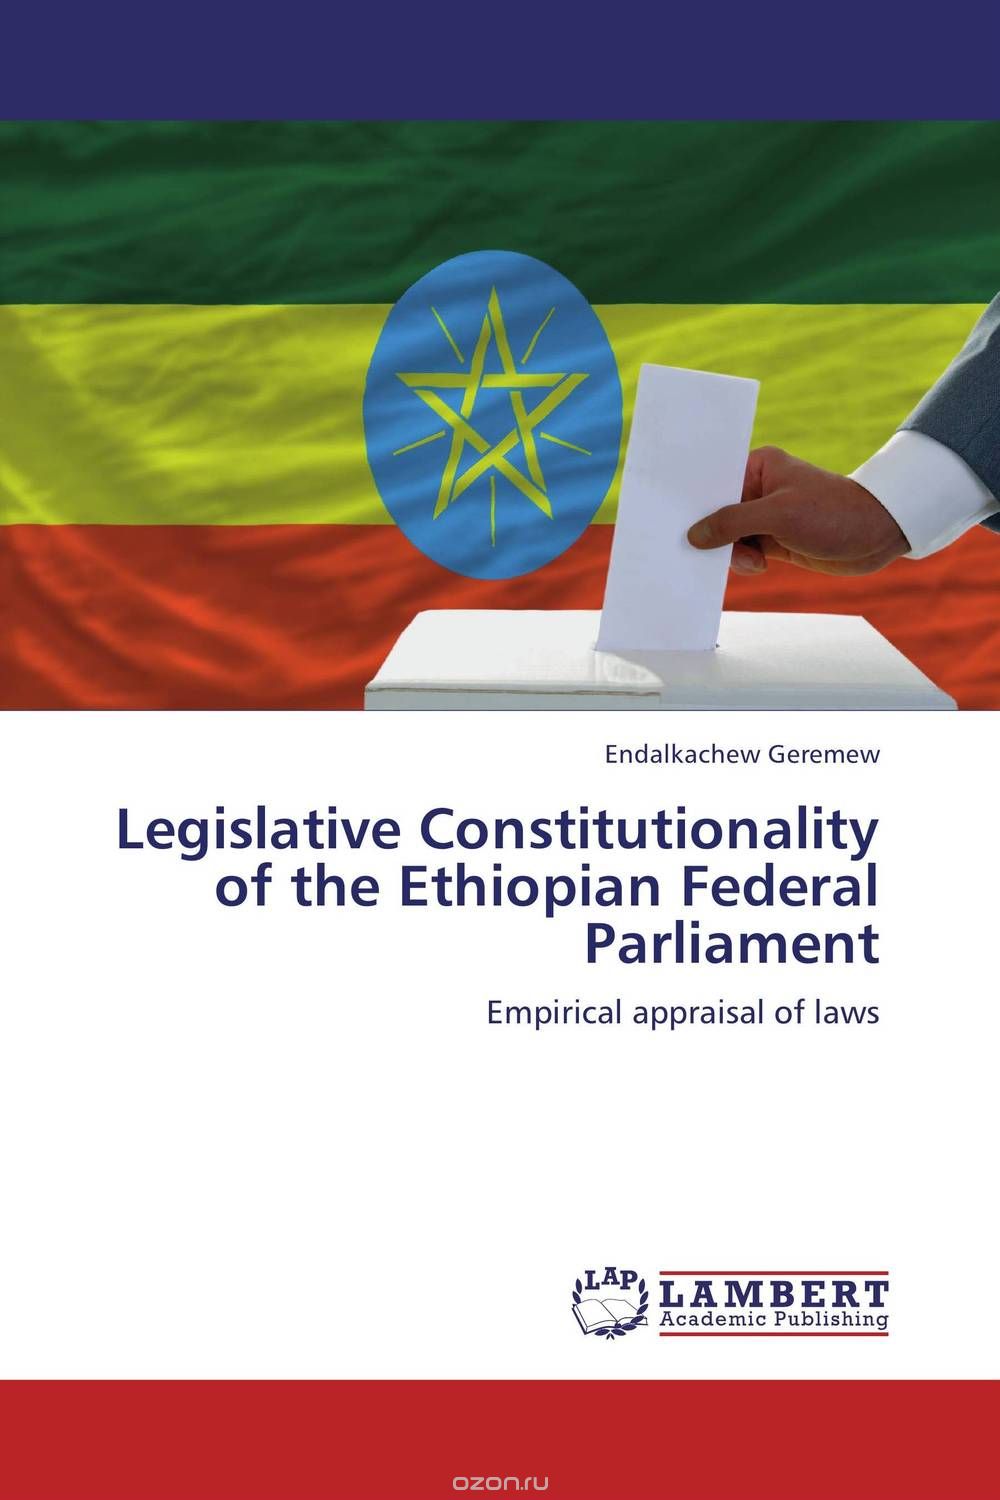 Скачать книгу "Legislative Constitutionality of the Ethiopian Federal Parliament"